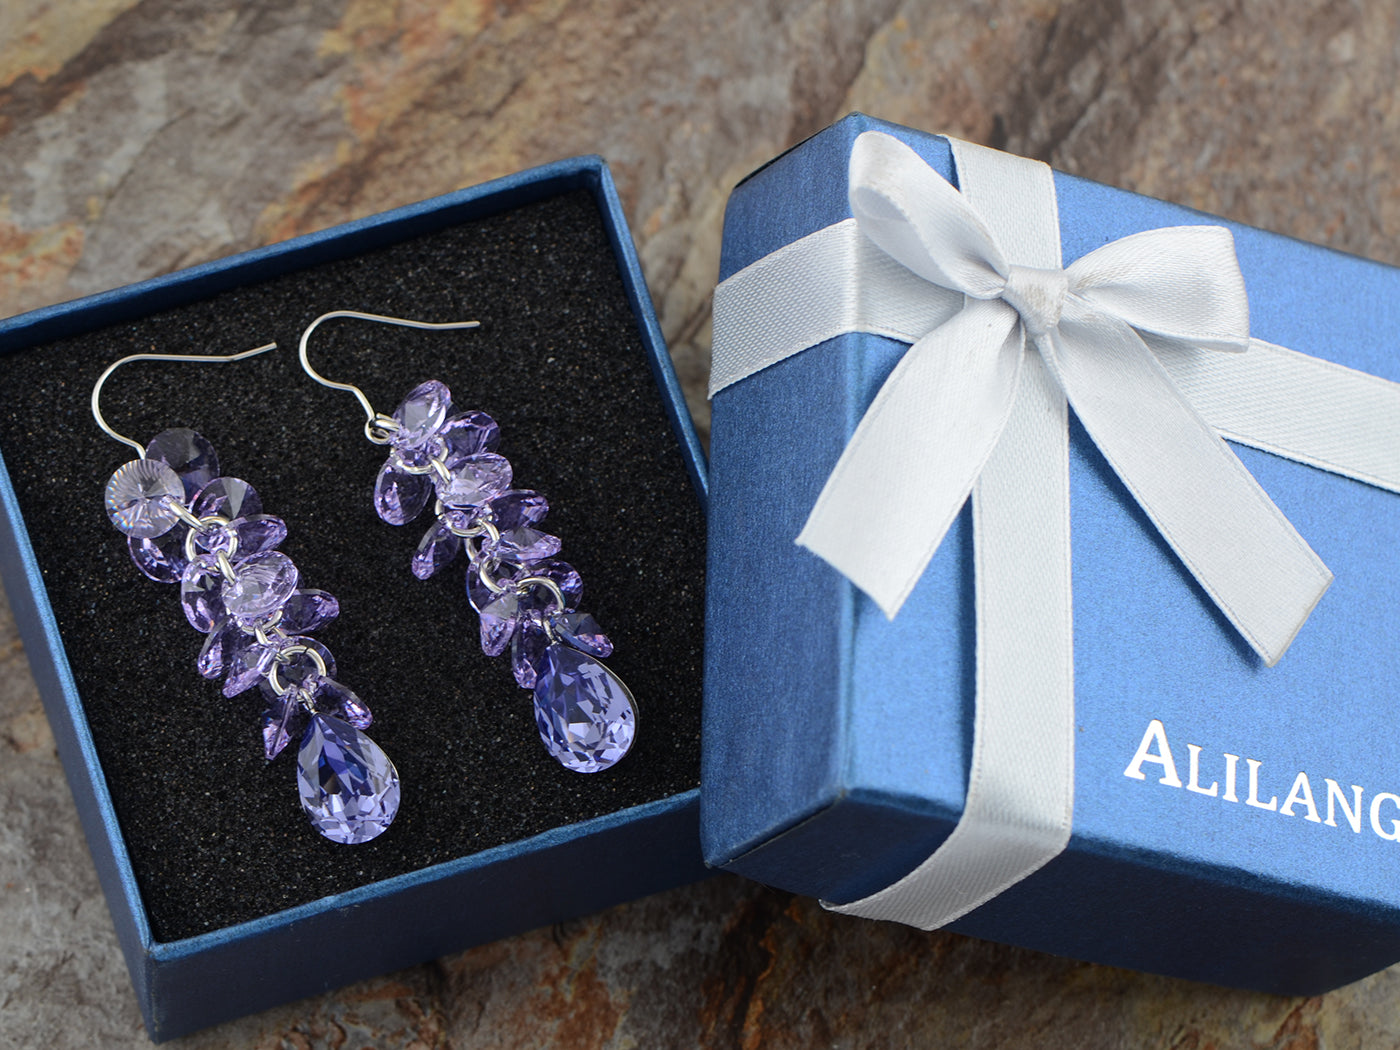 Purple Swarovski Crystal Teardrop Beads Cluster Hook Dangle Earrings